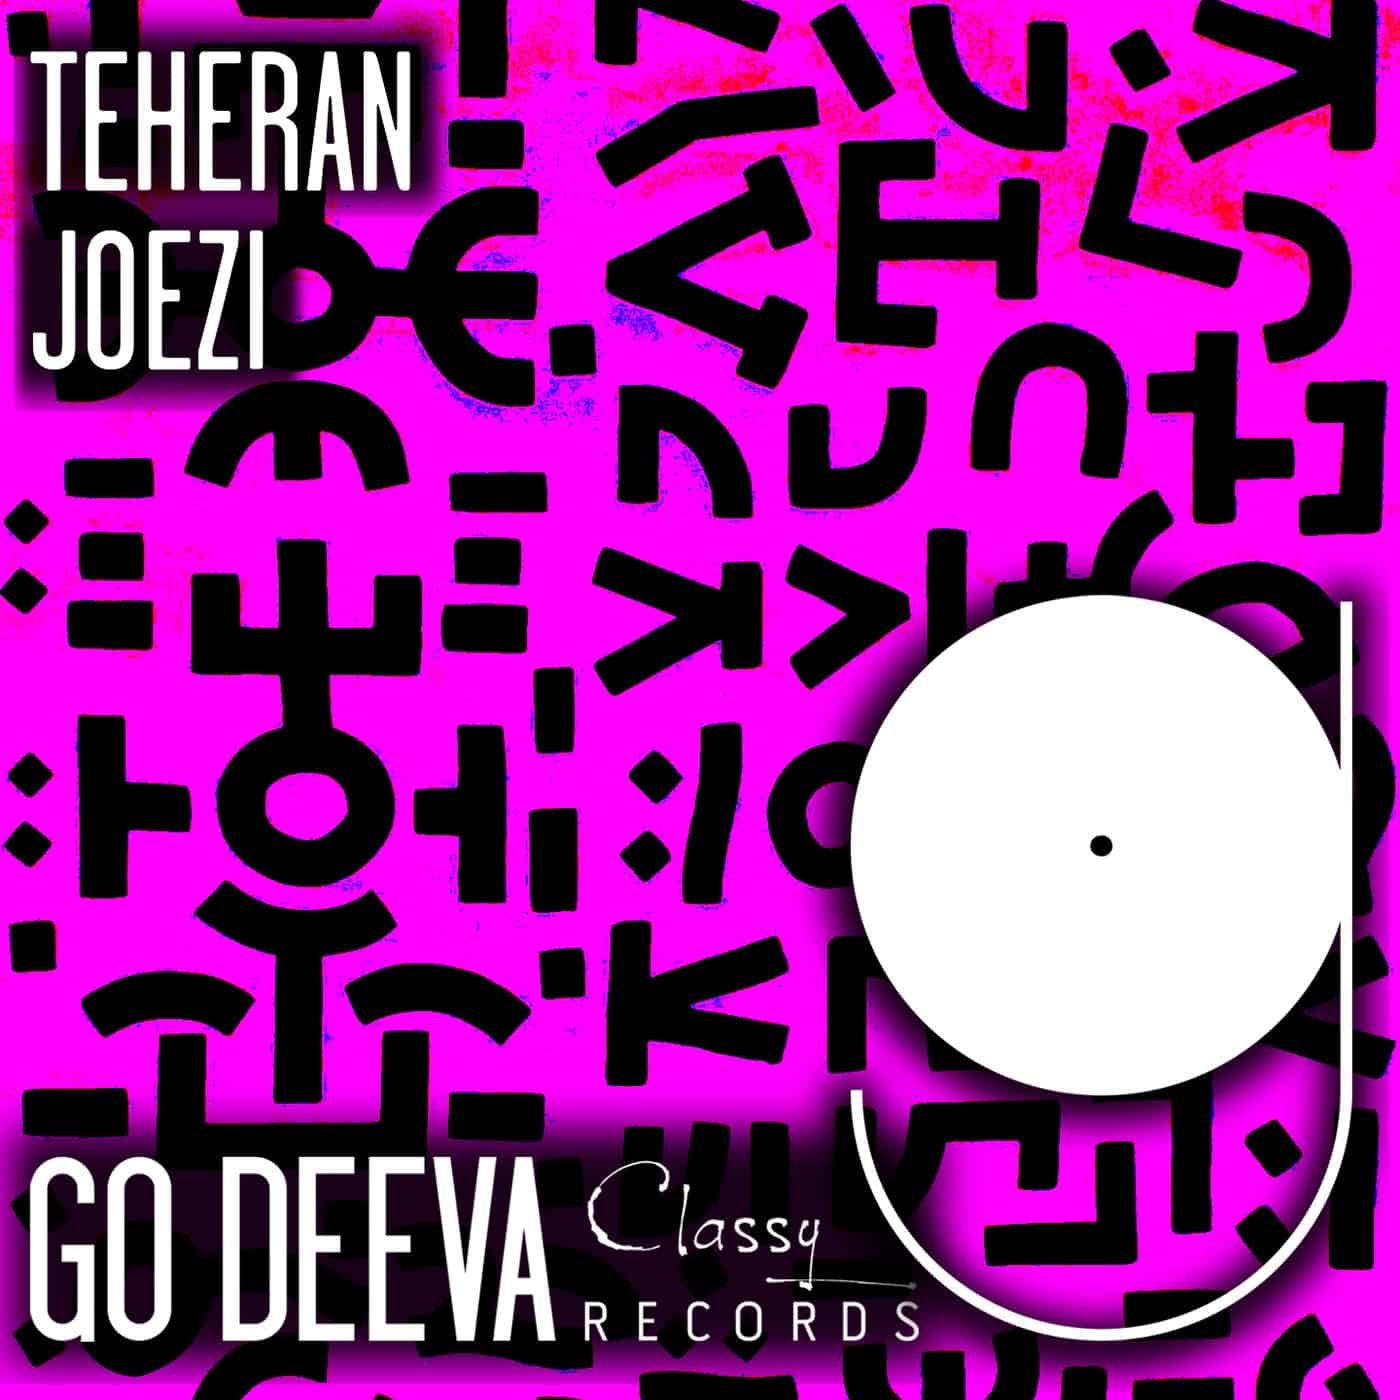 image cover: Teheran by Joezi on Go Deeva Records